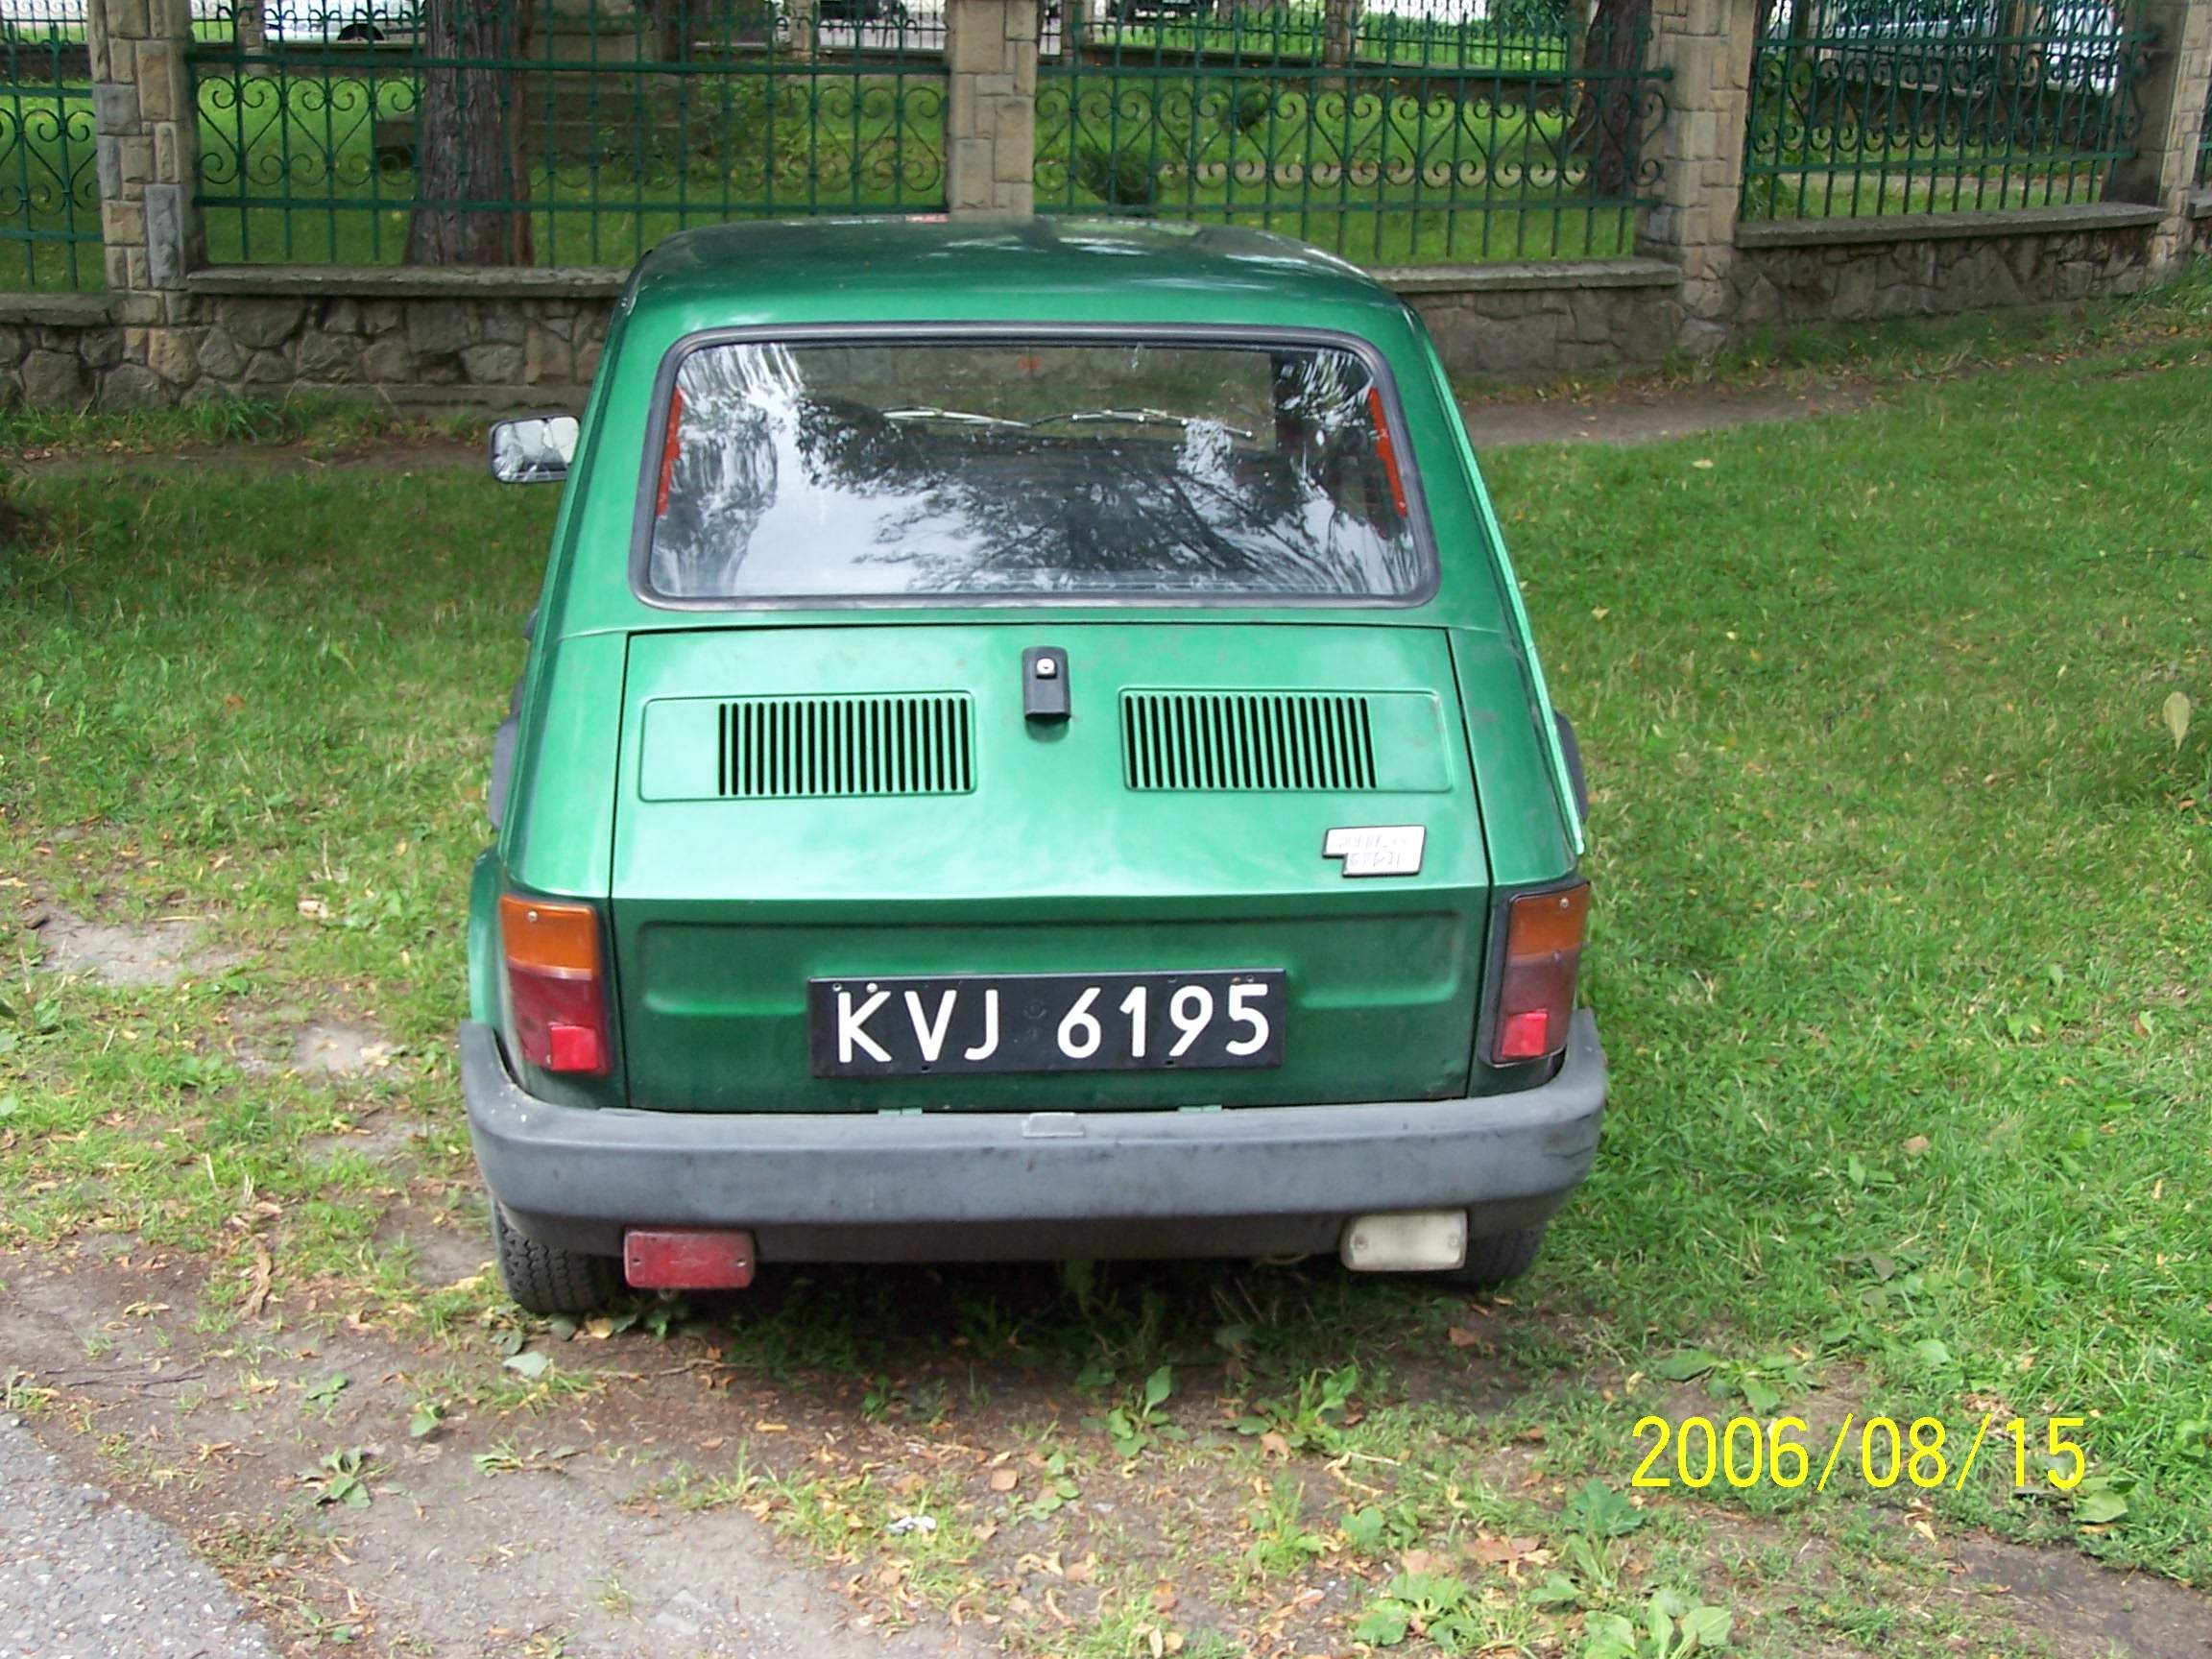 File:Fiat 126 back.JPG - Wikimedia Commons